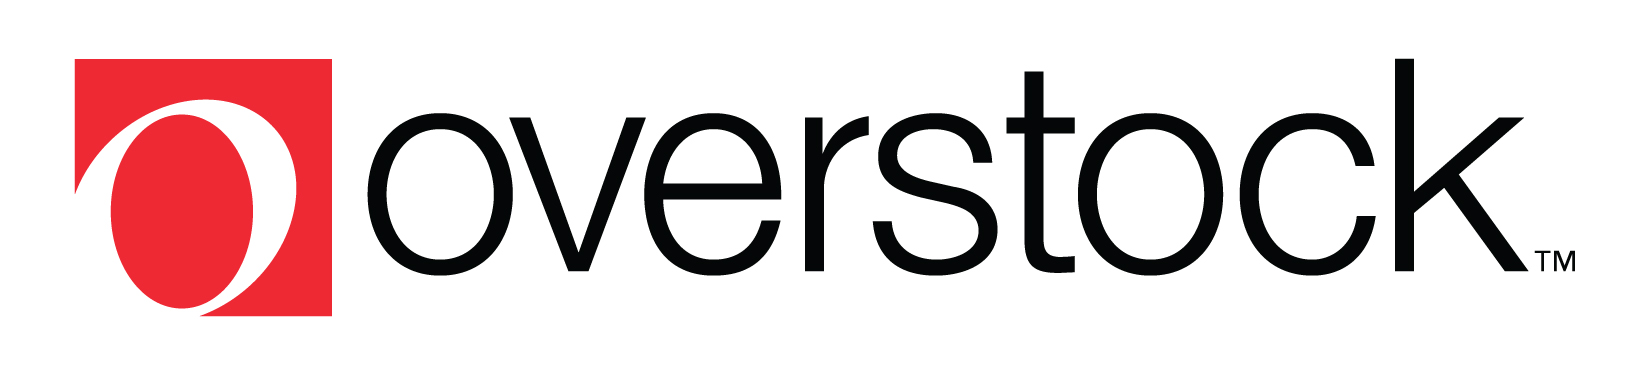 Overstock Logo 2017_RGB.JPG